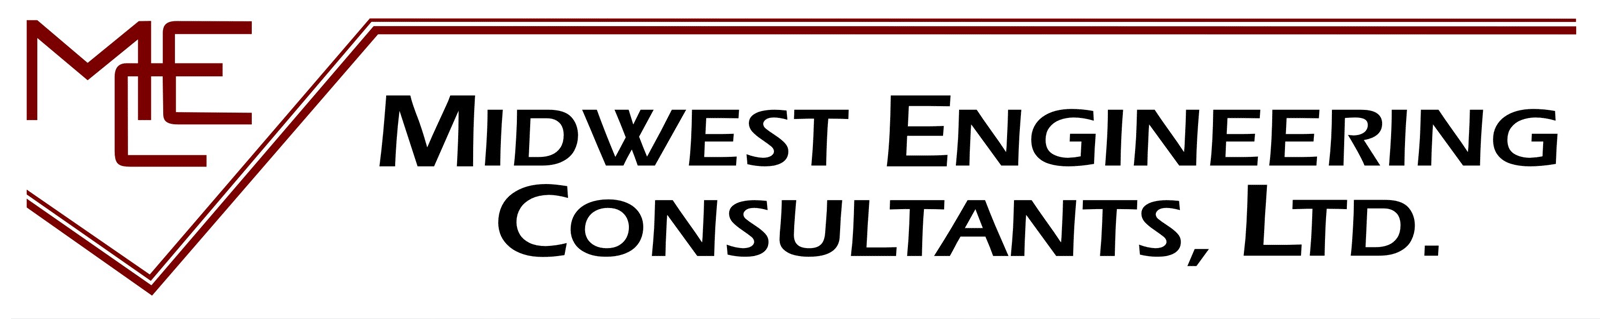 Midwest Engineering Consultants, LTD logo